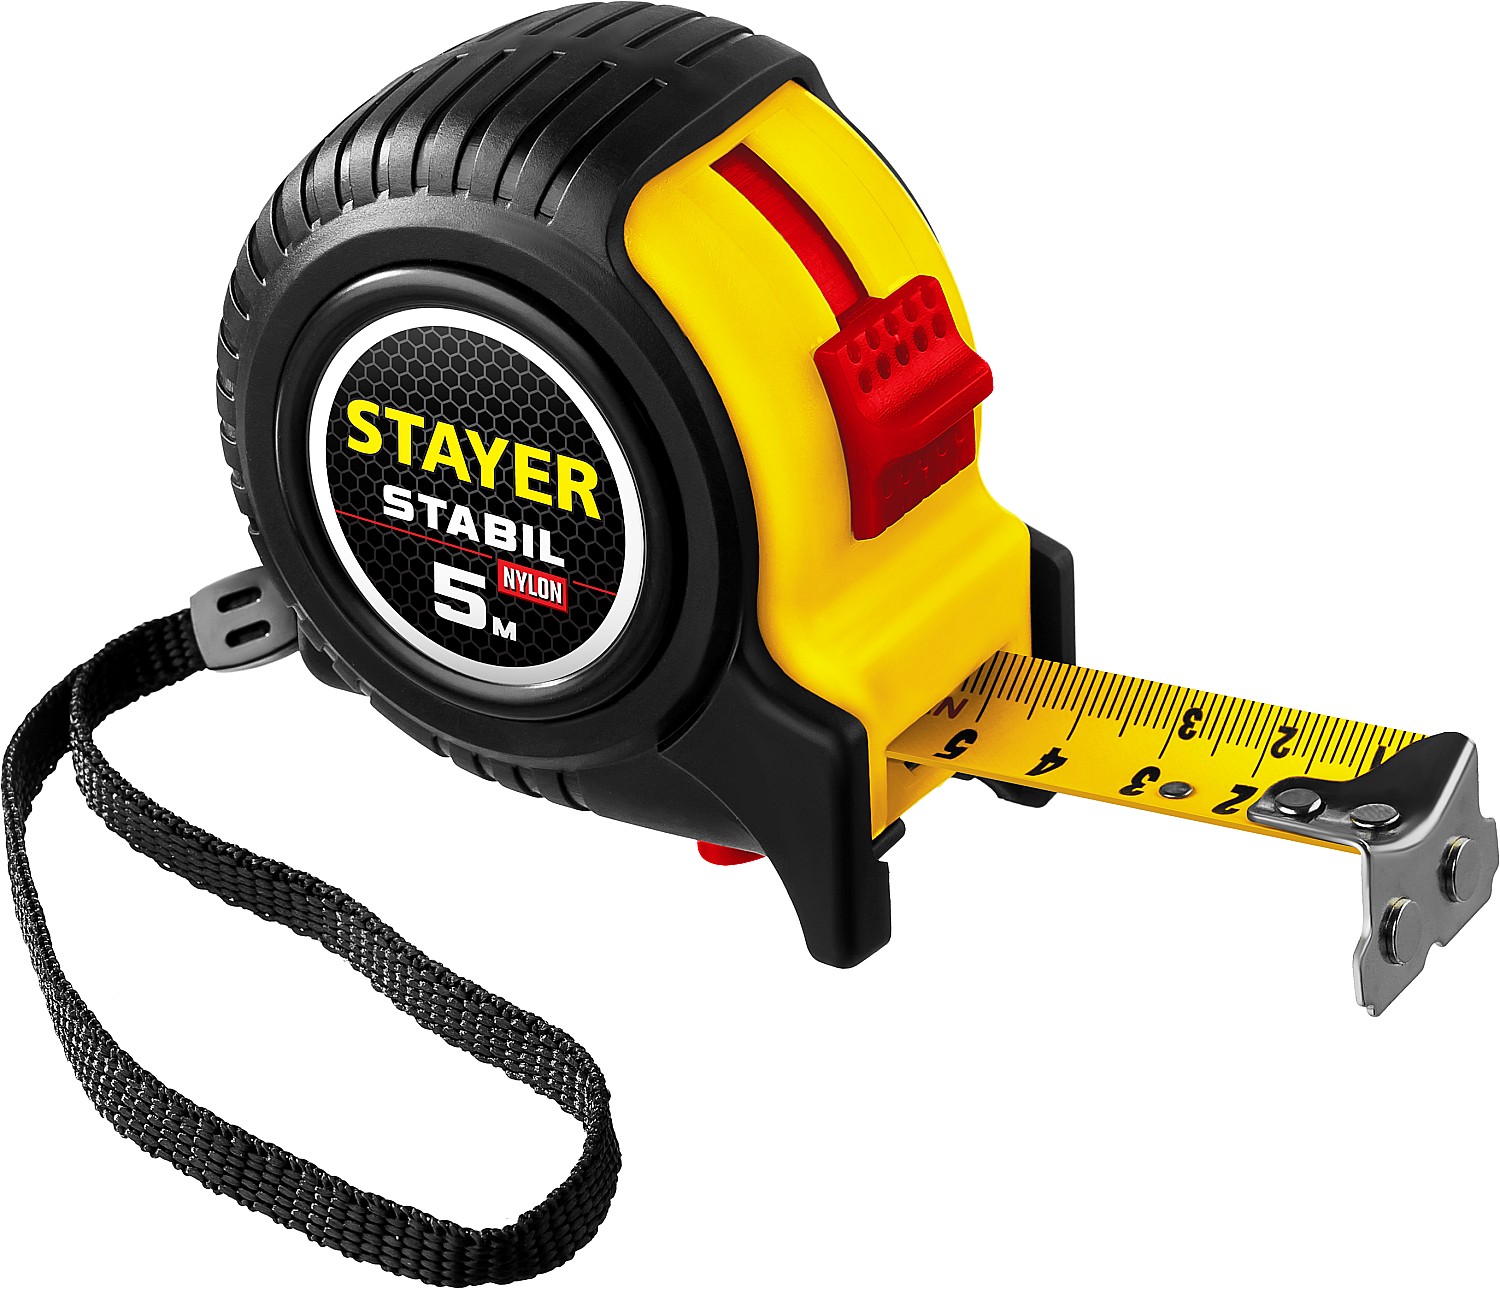 STAYER Stabil, 5 м х 25 мм, рулетка с двухсторонней шкалой, Professional (34131-05-25)